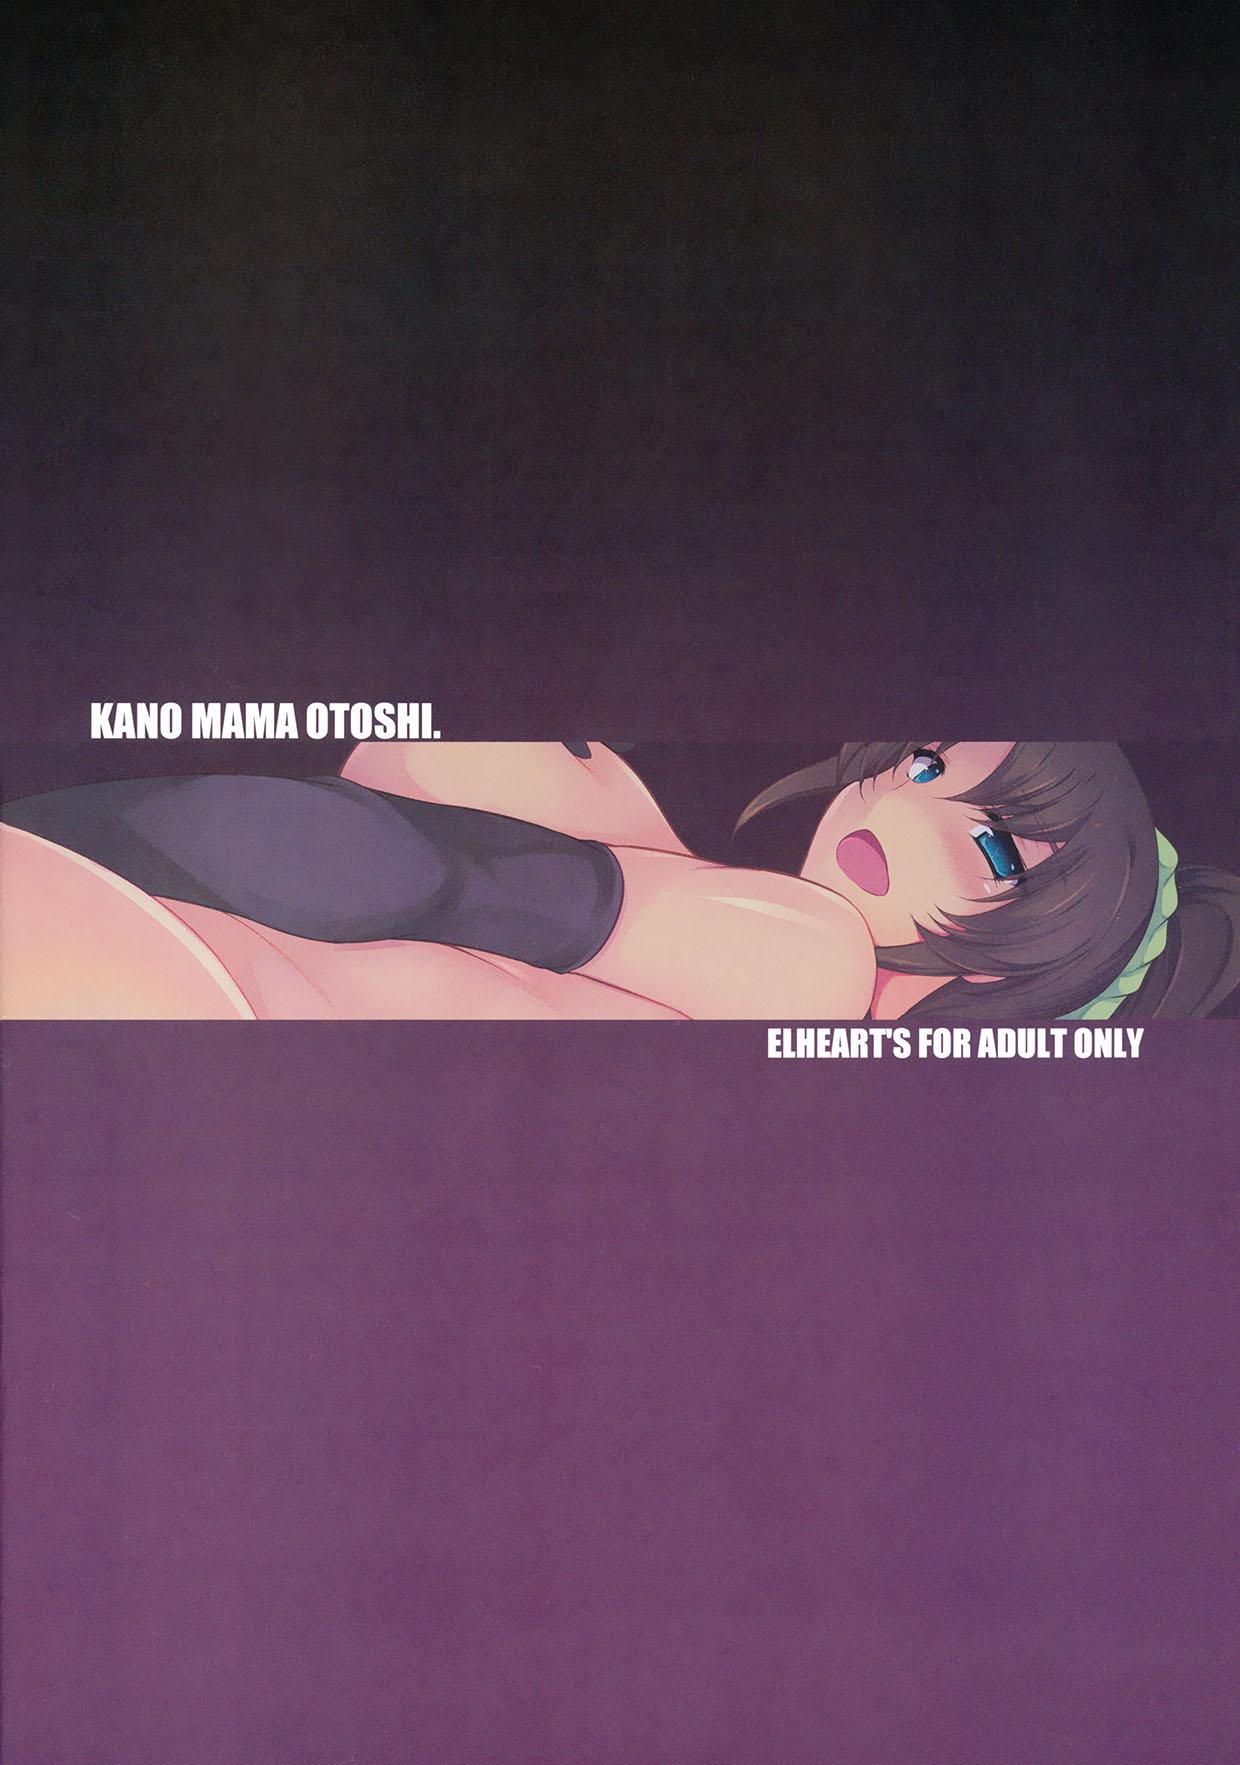 Kano Mama Otoshi. | My Girlfriend's Mom Has Fallen To Pleasure. 22